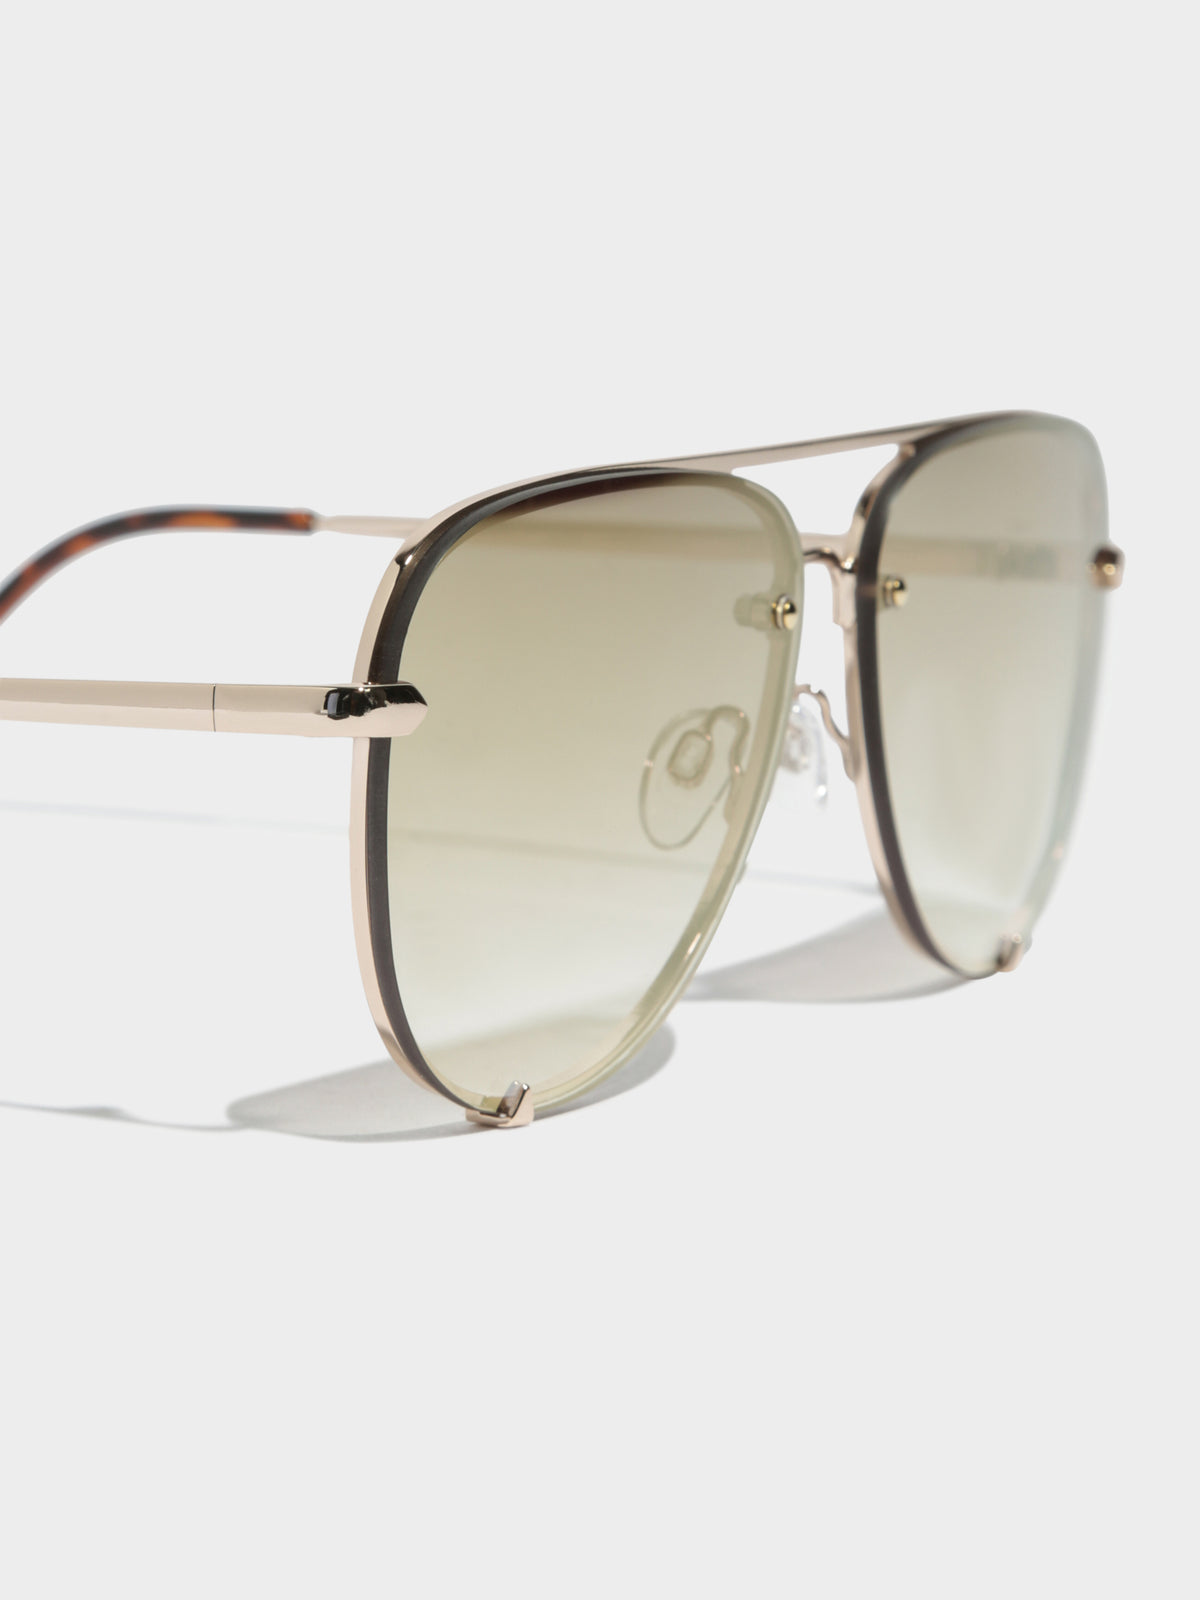 Mini High Key  Brown Lenses Sunglasses in Gold